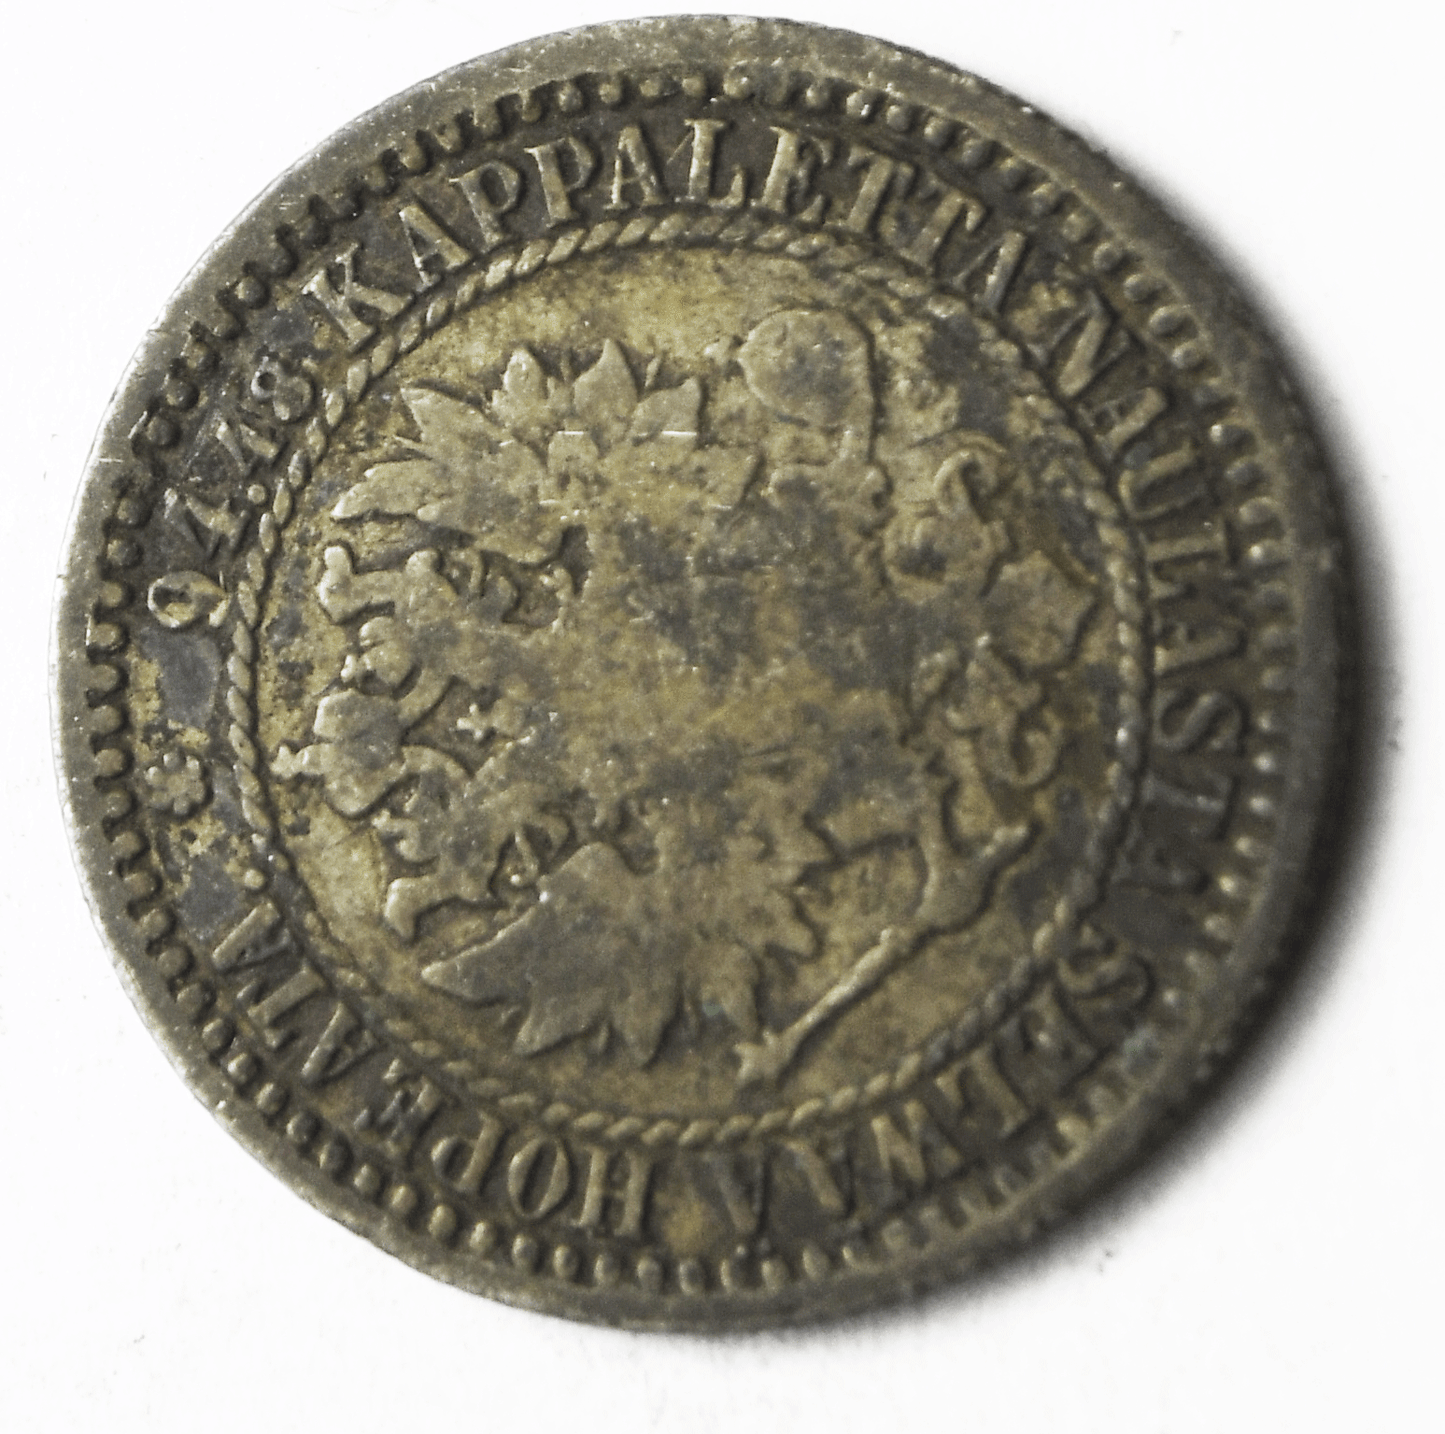 1965 S Finland Markka KM# 3.1 Silver Coin